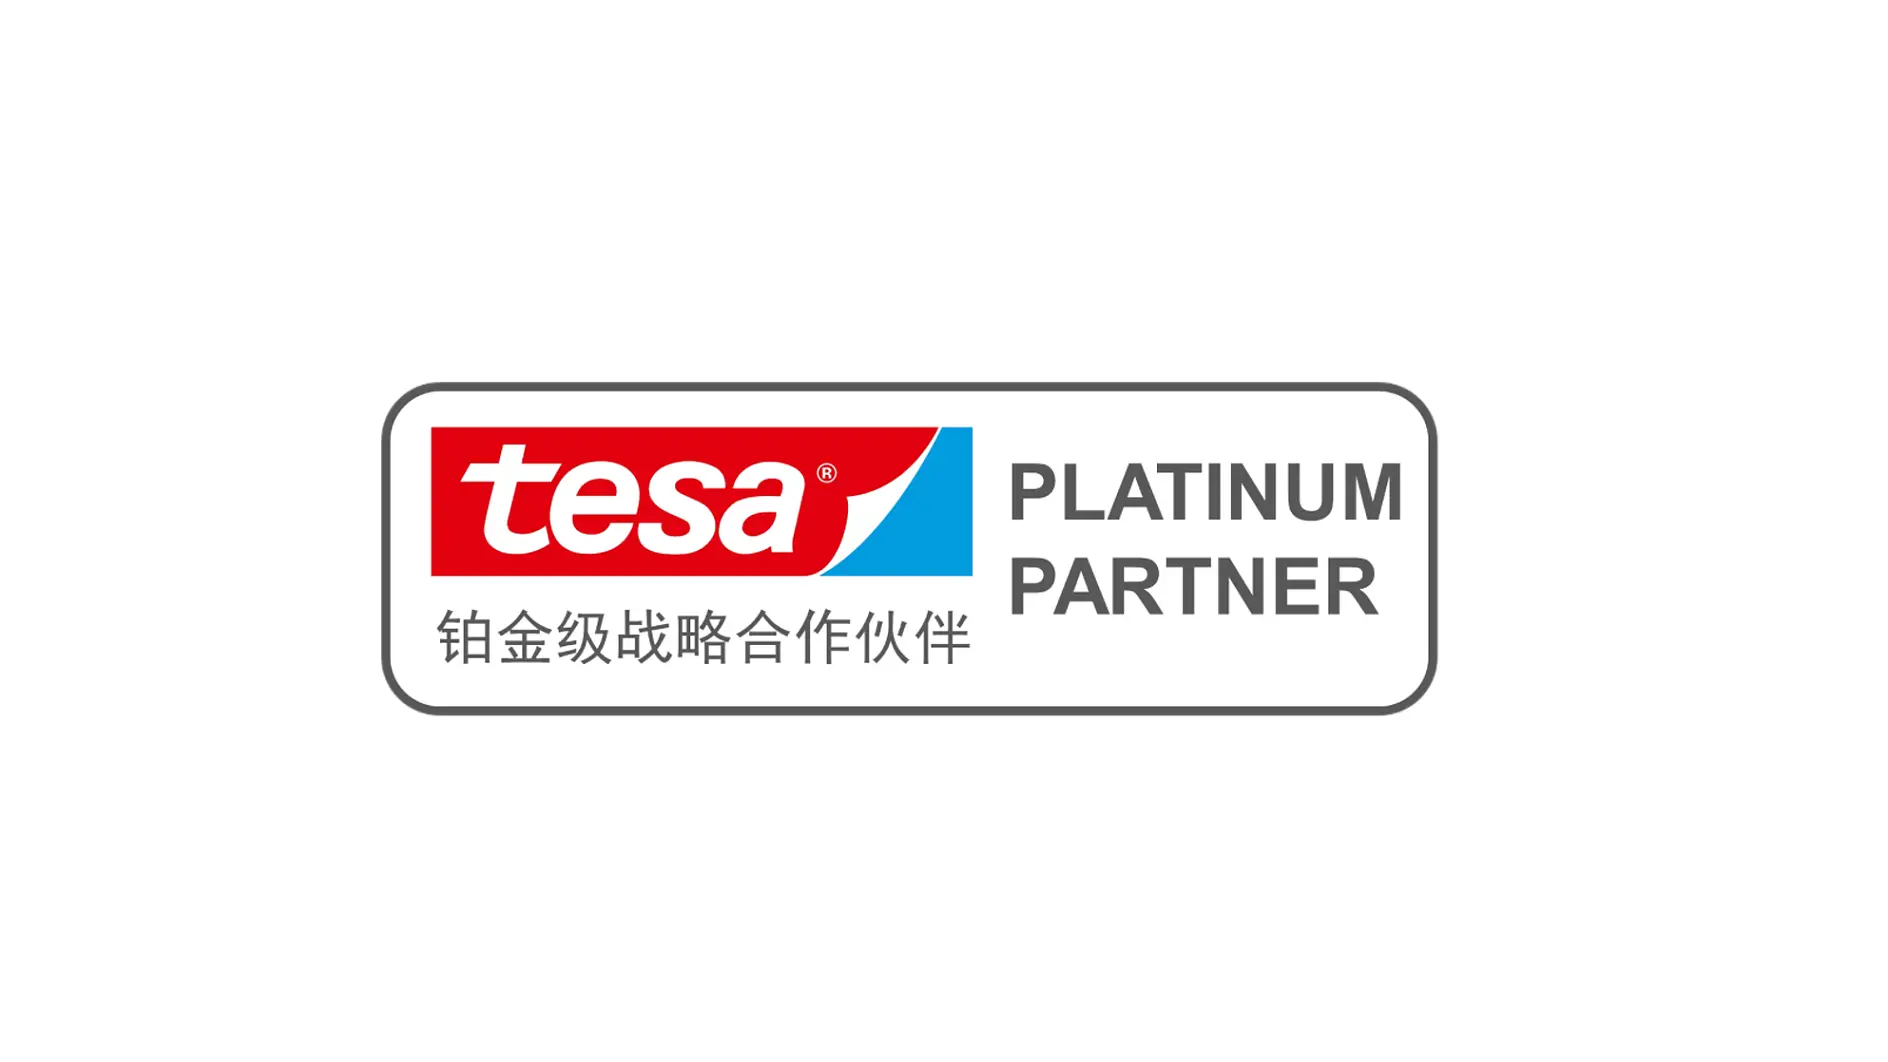 tPP_Logo_Platinum_Partner